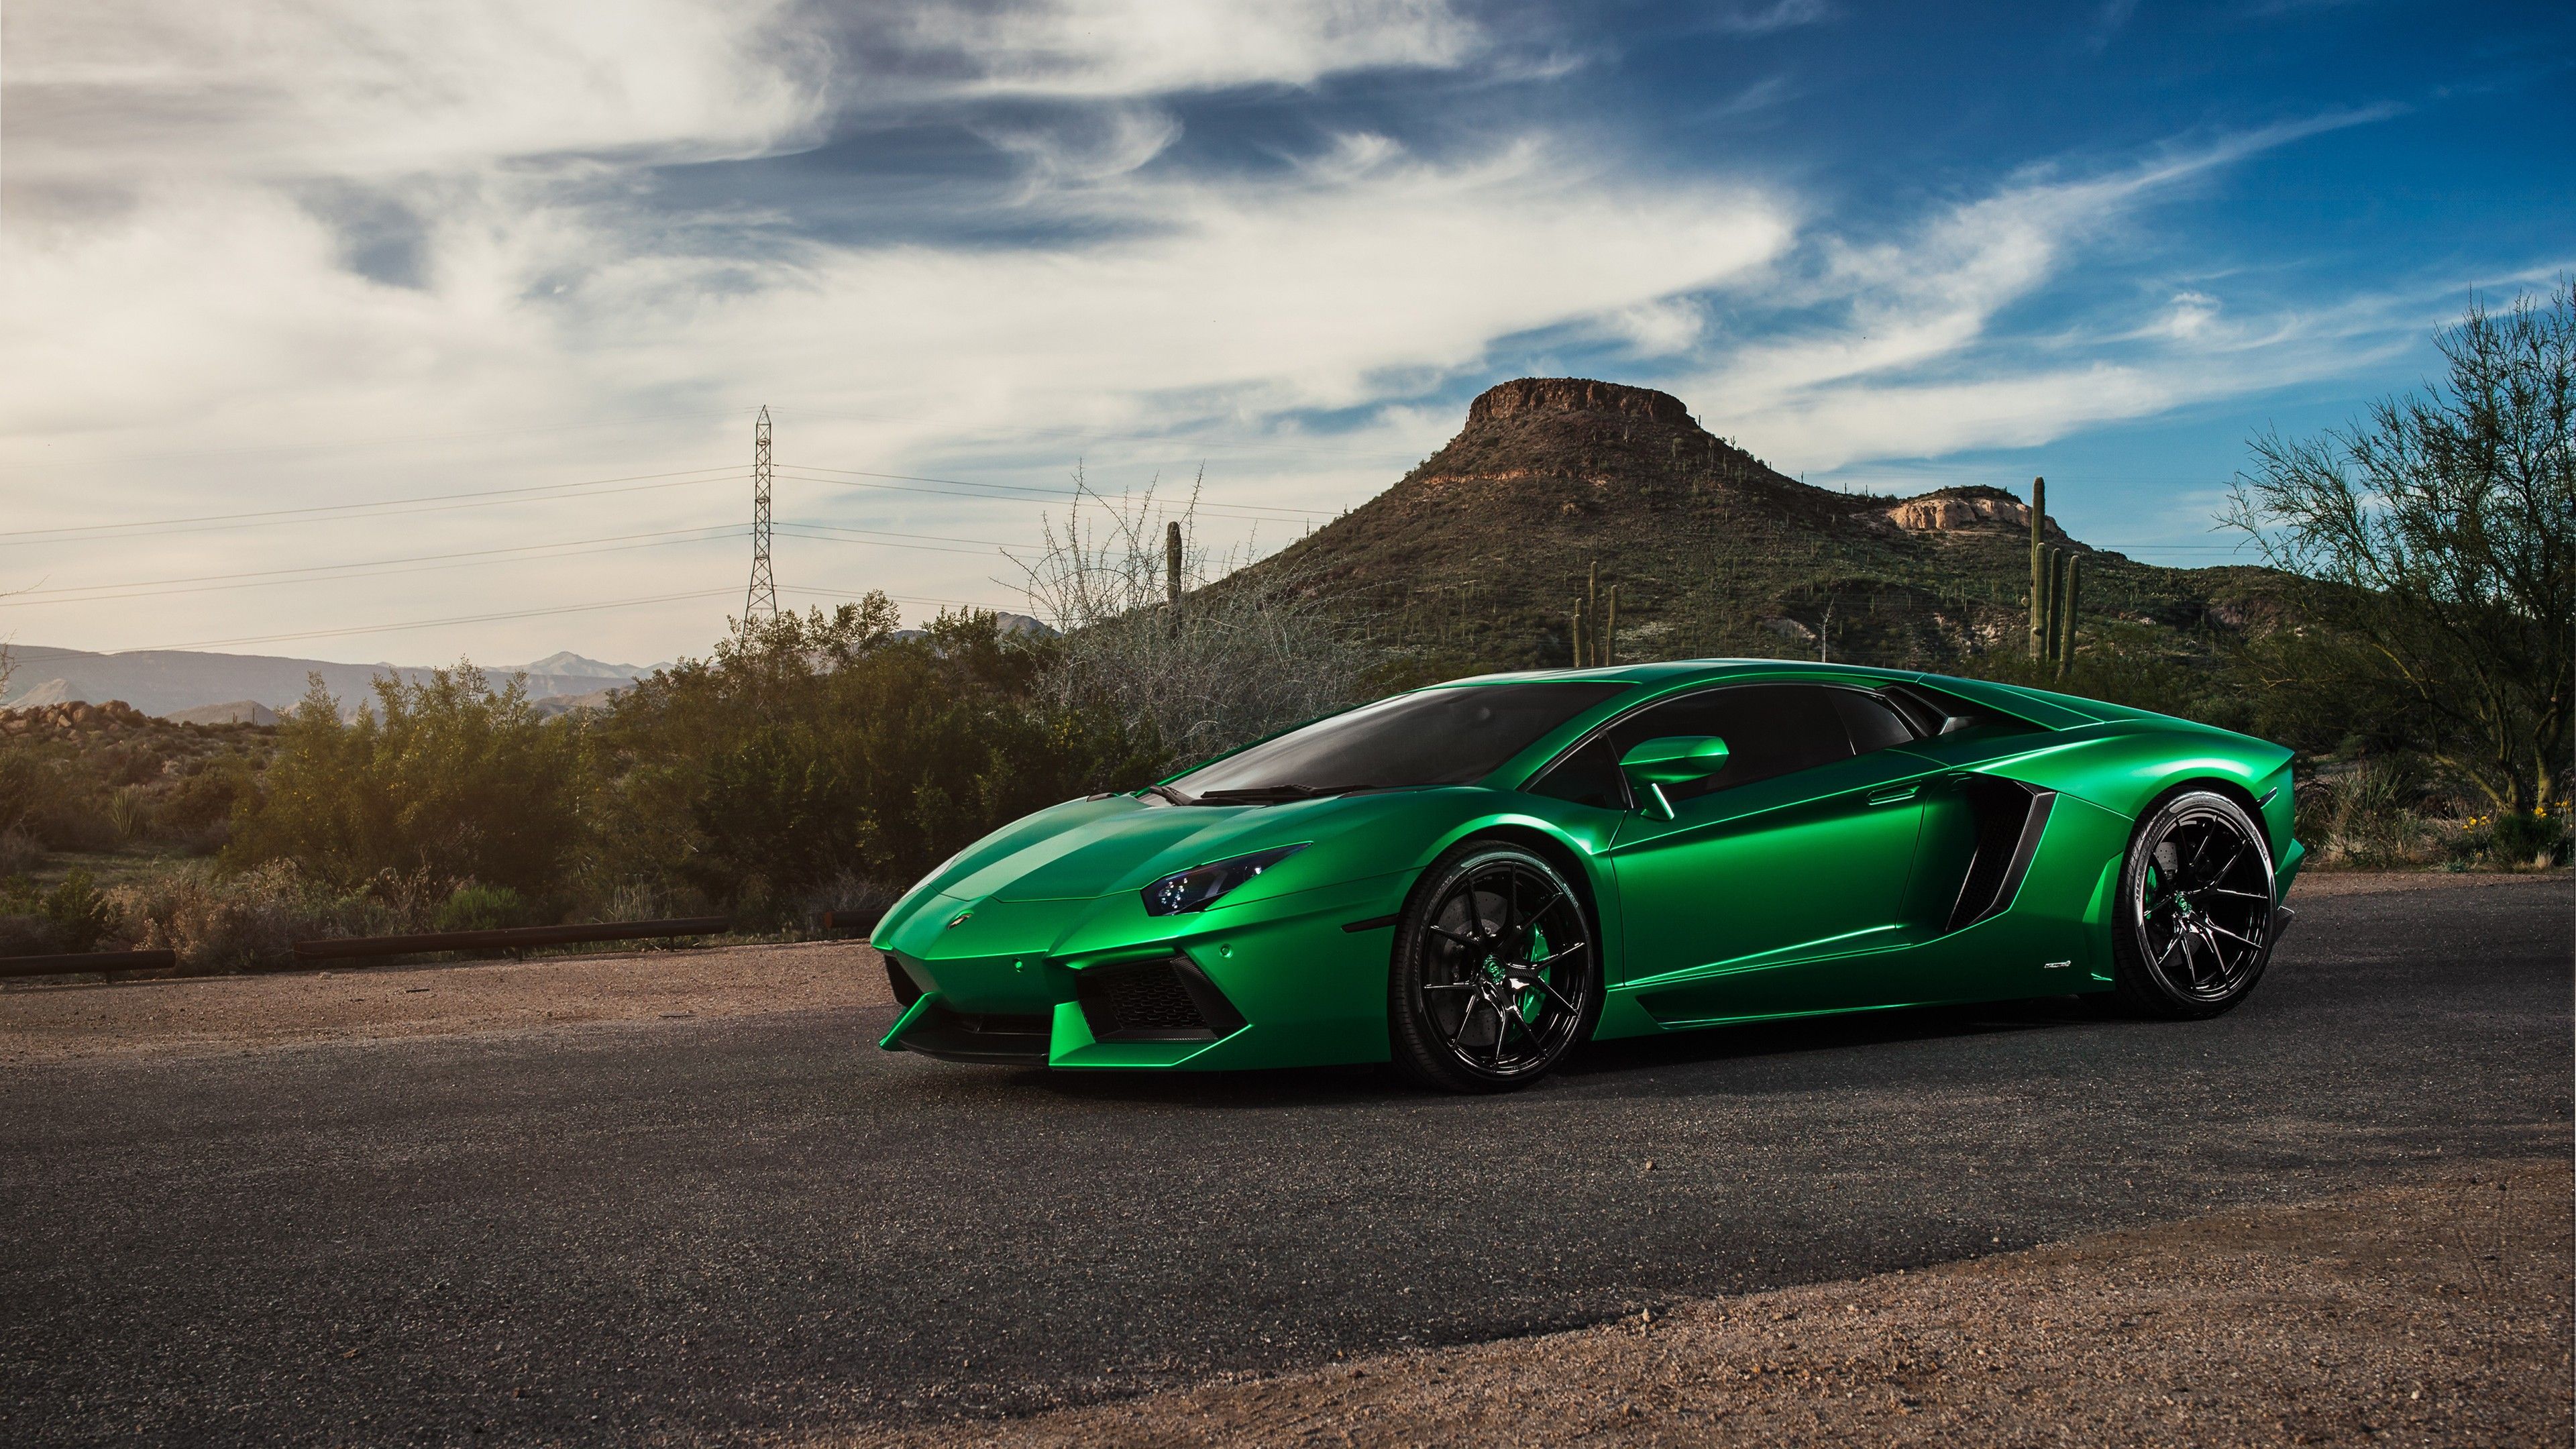 Lamborghini Aventador Green 4k 1366x768 Resolution HD 4k Wallpaper, Image, Background, Photo and Picture